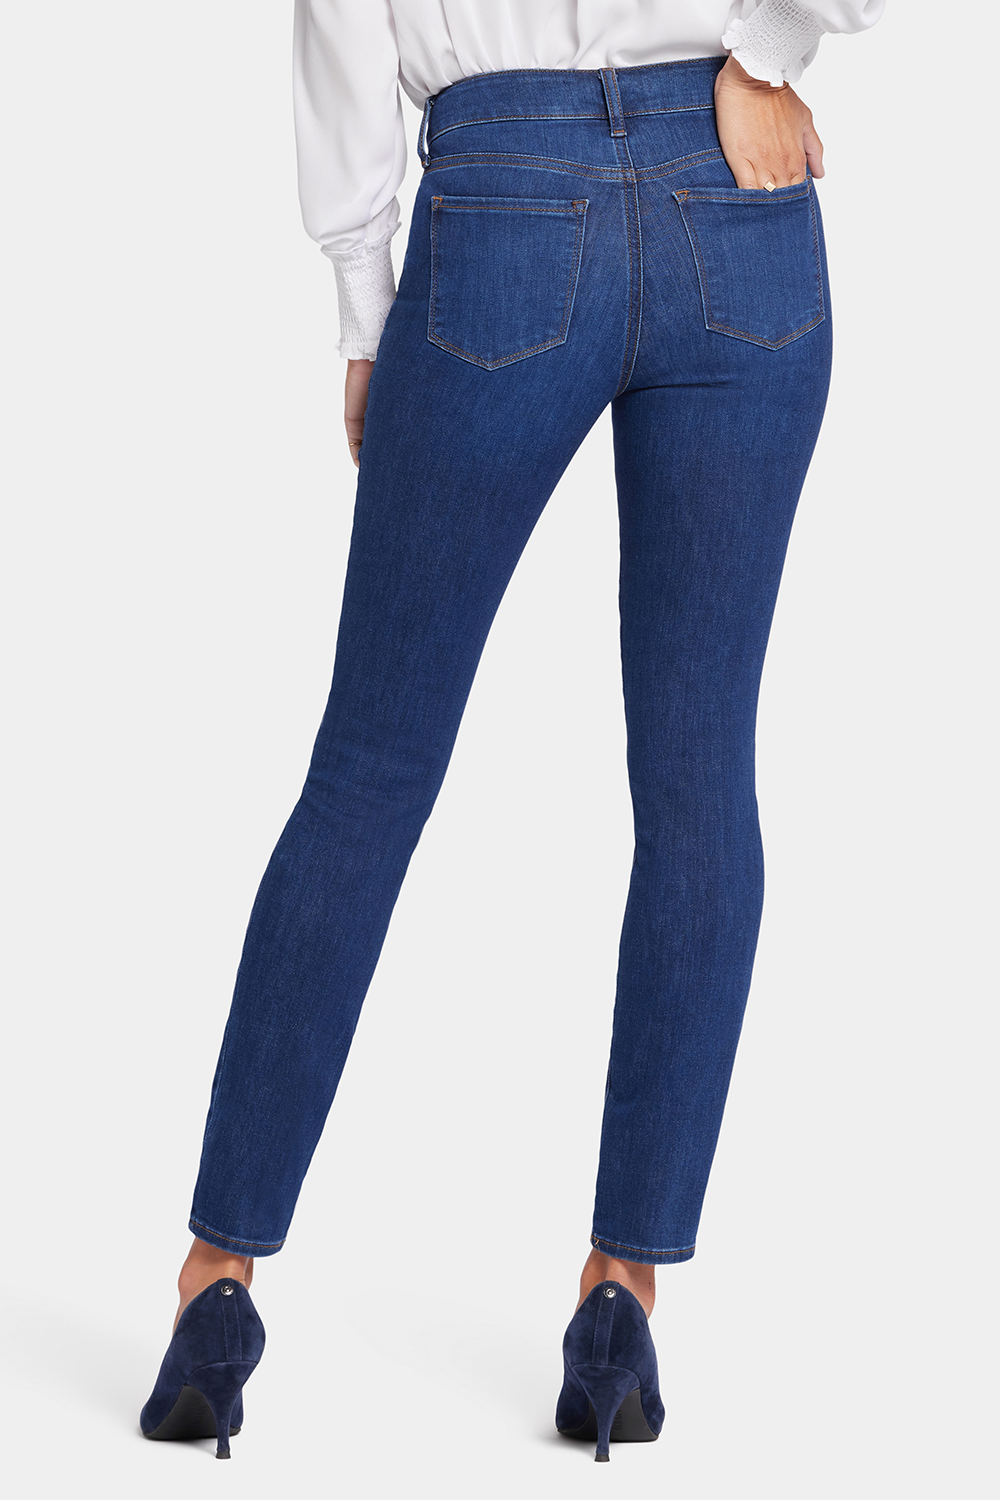 NYDJ Ami Skinny Jeans In Petite  - Cooper